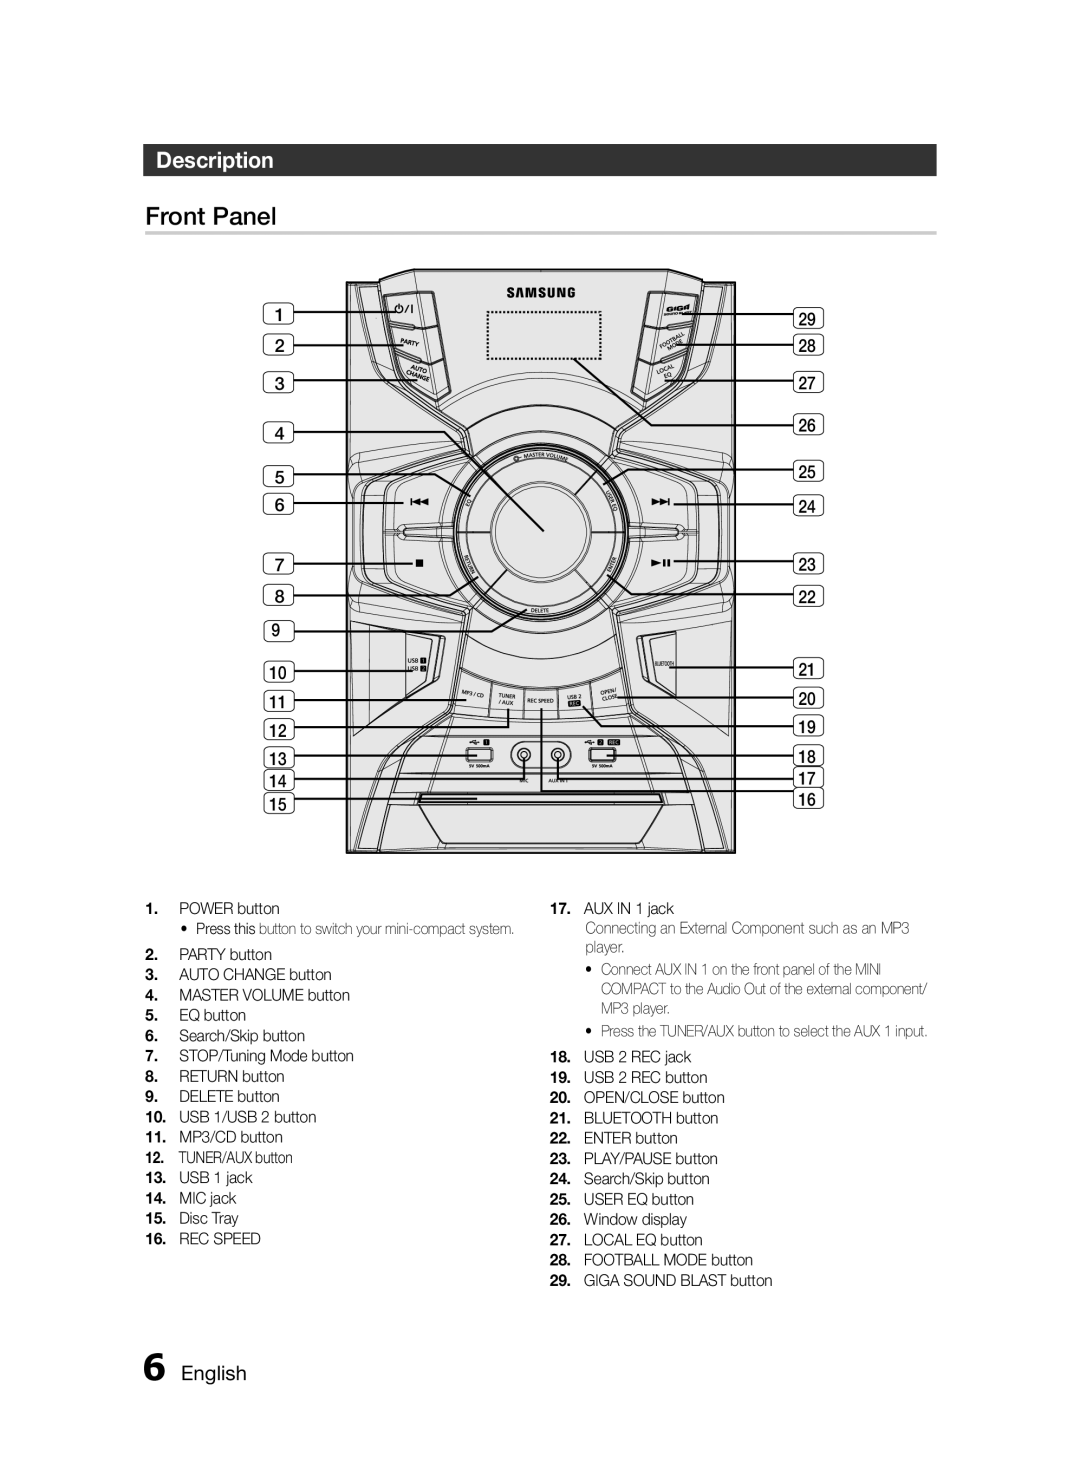 Samsung MXF830BZA user manual Front Panel, Description, English 